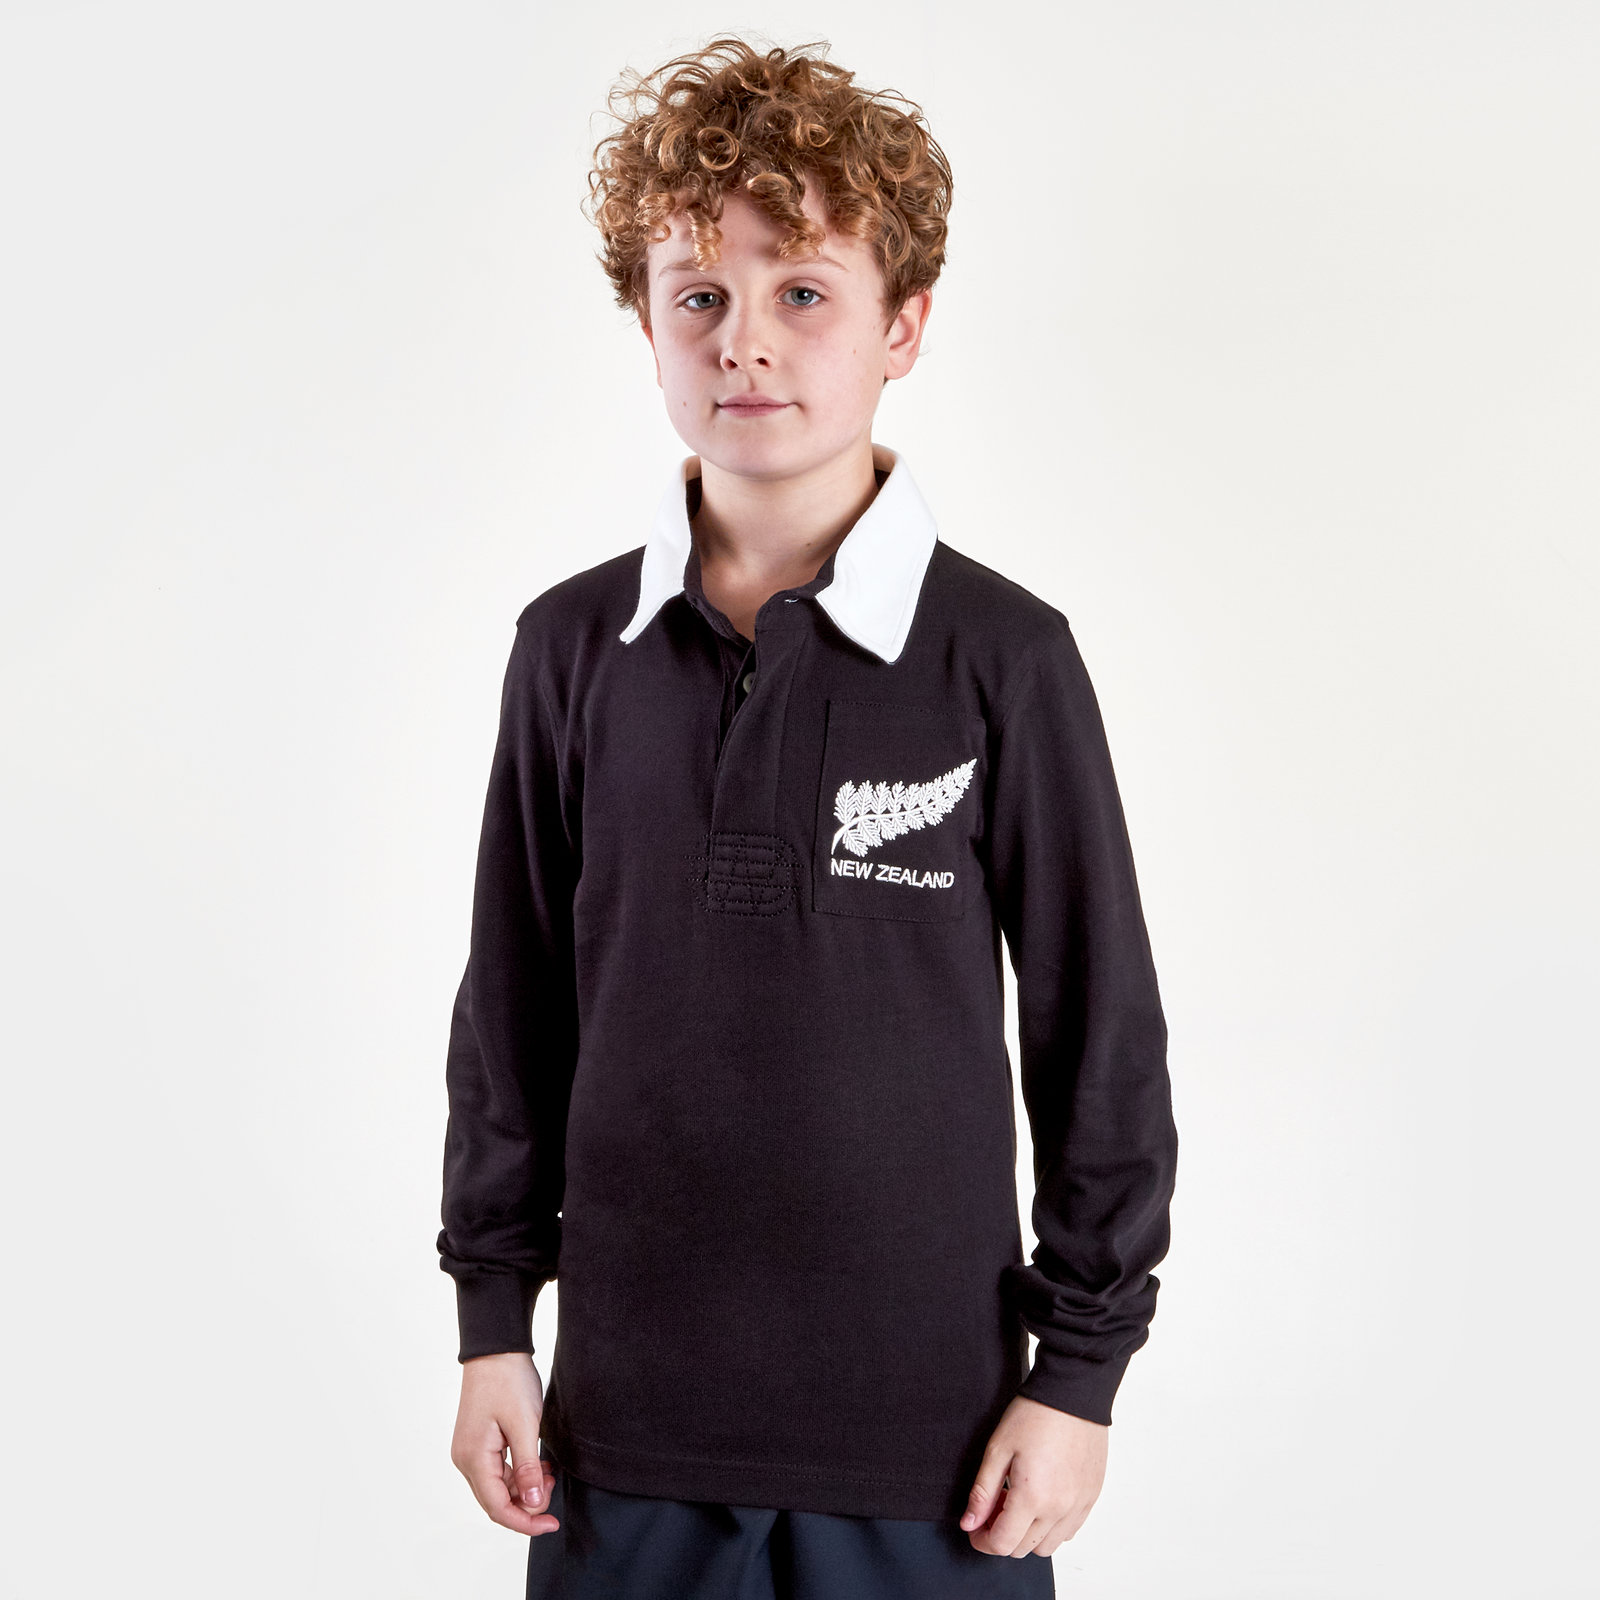 New Zealand 2019/20 Kids Vintage Rugby Shirt - All Black ...